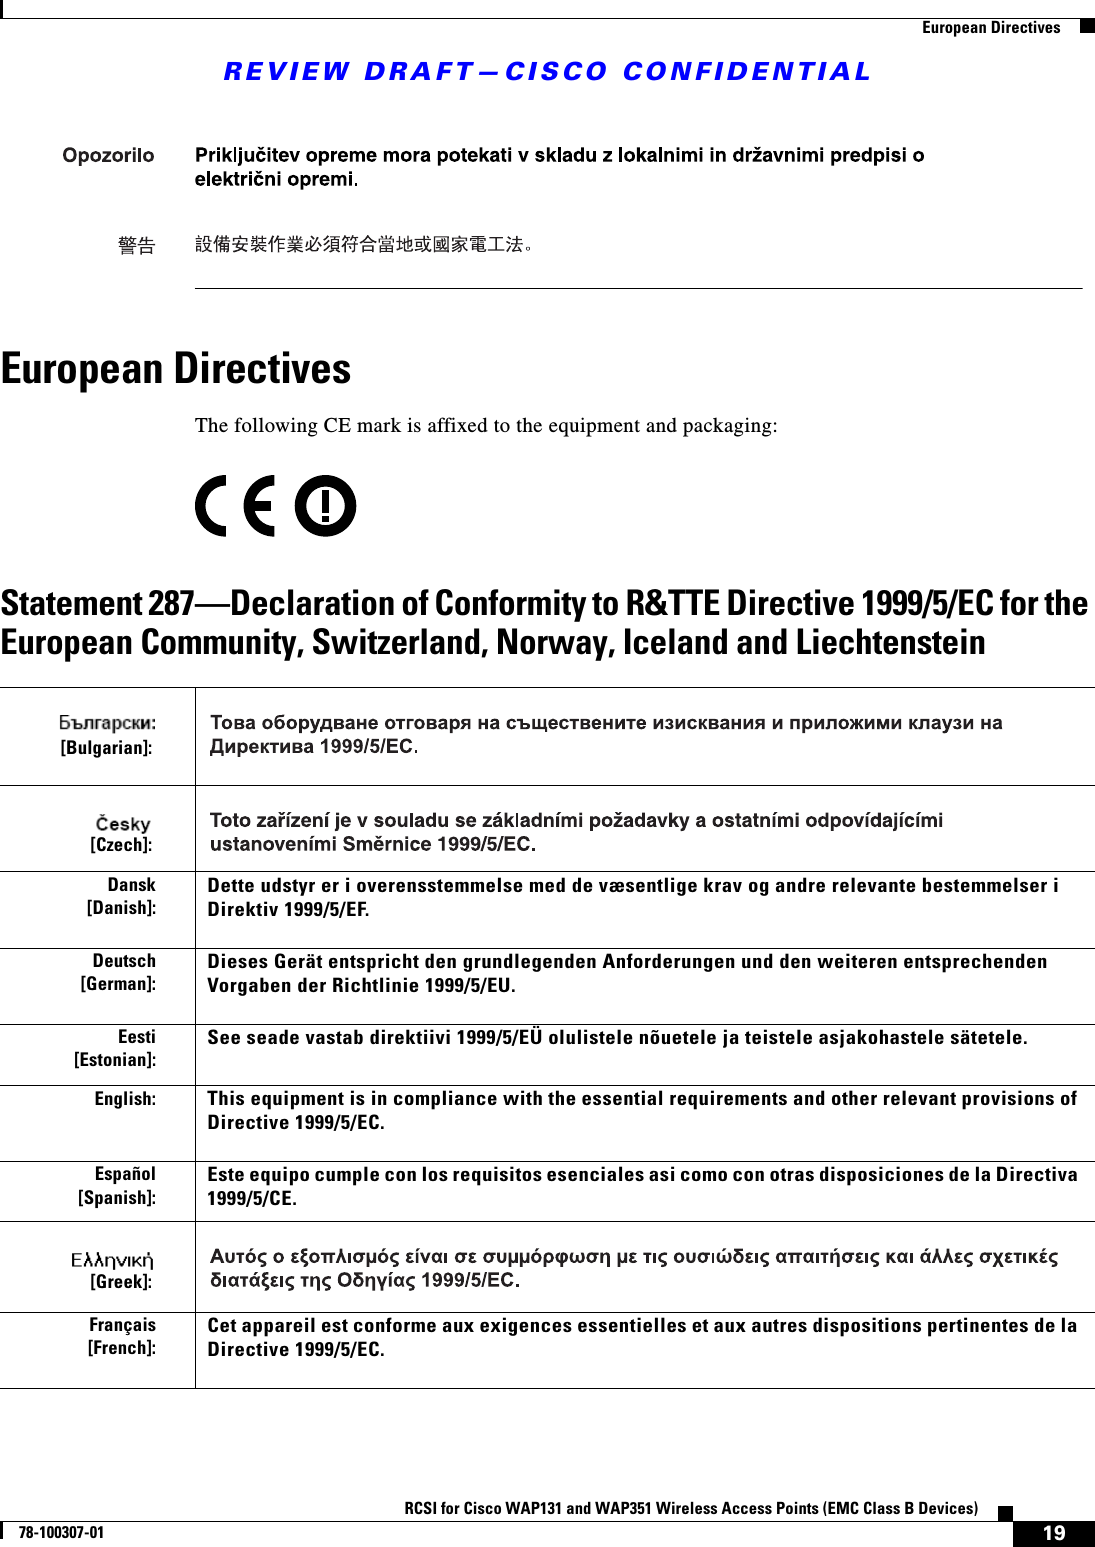 REVIEW DRAFT—CISCO CONFIDENTIAL19RCSI for Cisco WAP131 and WAP351 Wireless Access Points (EMC Class B Devices)78-100307-01  European DirectivesEuropean DirectivesThe following CE mark is affixed to the equipment and packaging:Statement 287—Declaration of Conformity to R&amp;TTE Directive 1999/5/EC for the European Community, Switzerland, Norway, Iceland and Liechtenstein[Bulgarian]:[Czech]:Dansk[Danish]:Dette udstyr er i overensstemmelse med de væsentlige krav og andre relevante bestemmelser i Direktiv 1999/5/EF.Deutsch[German]:Dieses Gerät entspricht den grundlegenden Anforderungen und den weiteren entsprechenden Vorgaben der Richtlinie 1999/5/EU.Eesti[Estonian]:See seade vastab direktiivi 1999/5/EÜ olulistele nõuetele ja teistele asjakohastele sätetele.English:This equipment is in compliance with the essential requirements and other relevant provisions of Directive 1999/5/EC.Español[Spanish]:Este equipo cumple con los requisitos esenciales asi como con otras disposiciones de la Directiva 1999/5/CE.[Greek]:Français[French]:Cet appareil est conforme aux exigences essentielles et aux autres dispositions pertinentes de la Directive 1999/5/EC.